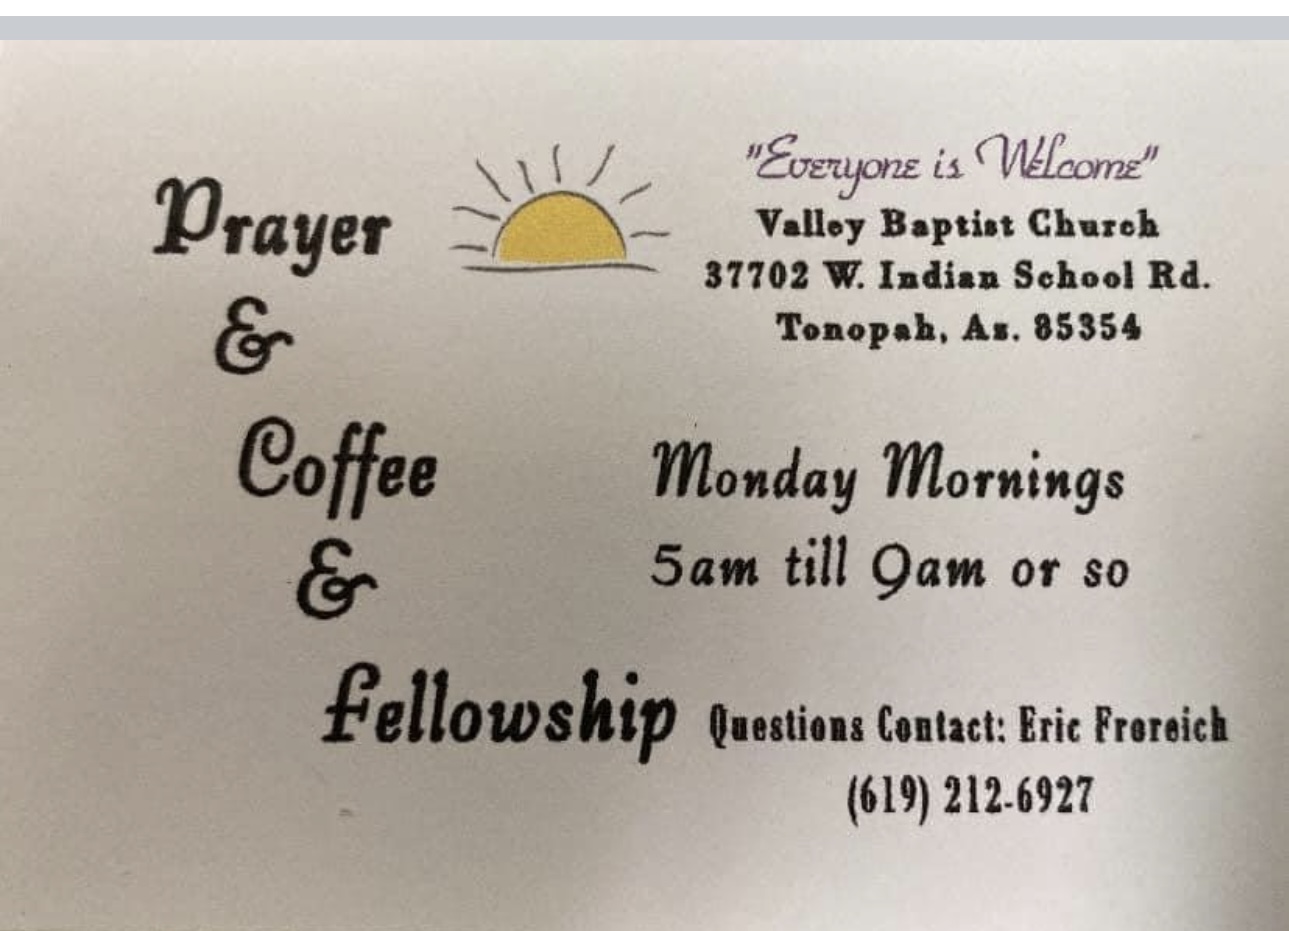 Prayer & Coffee & Fellowship Monday Mornings 5 am to 9 am